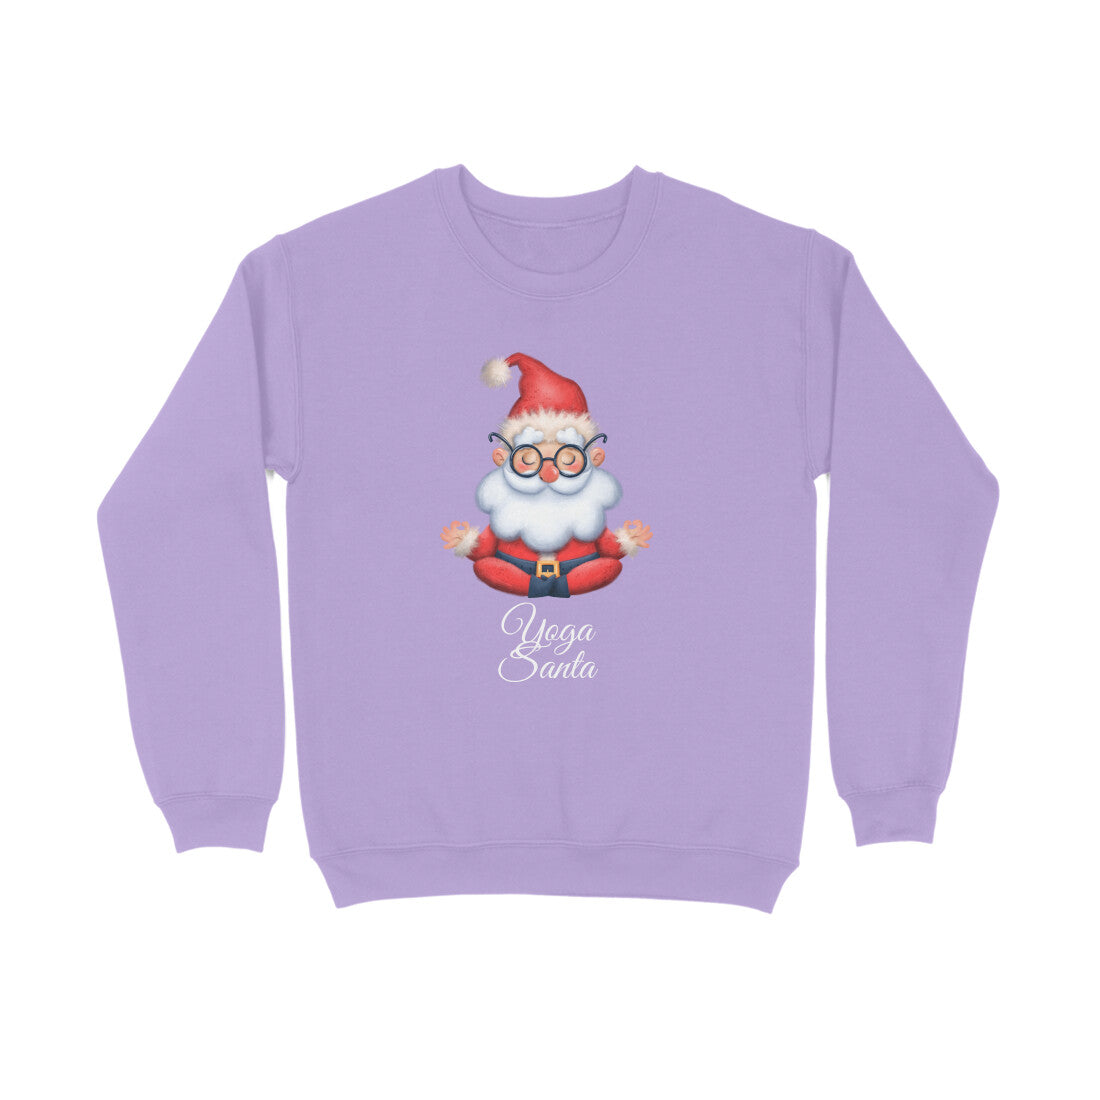 Yoga Santa - Unisex Iris Lavender Sweatshirt